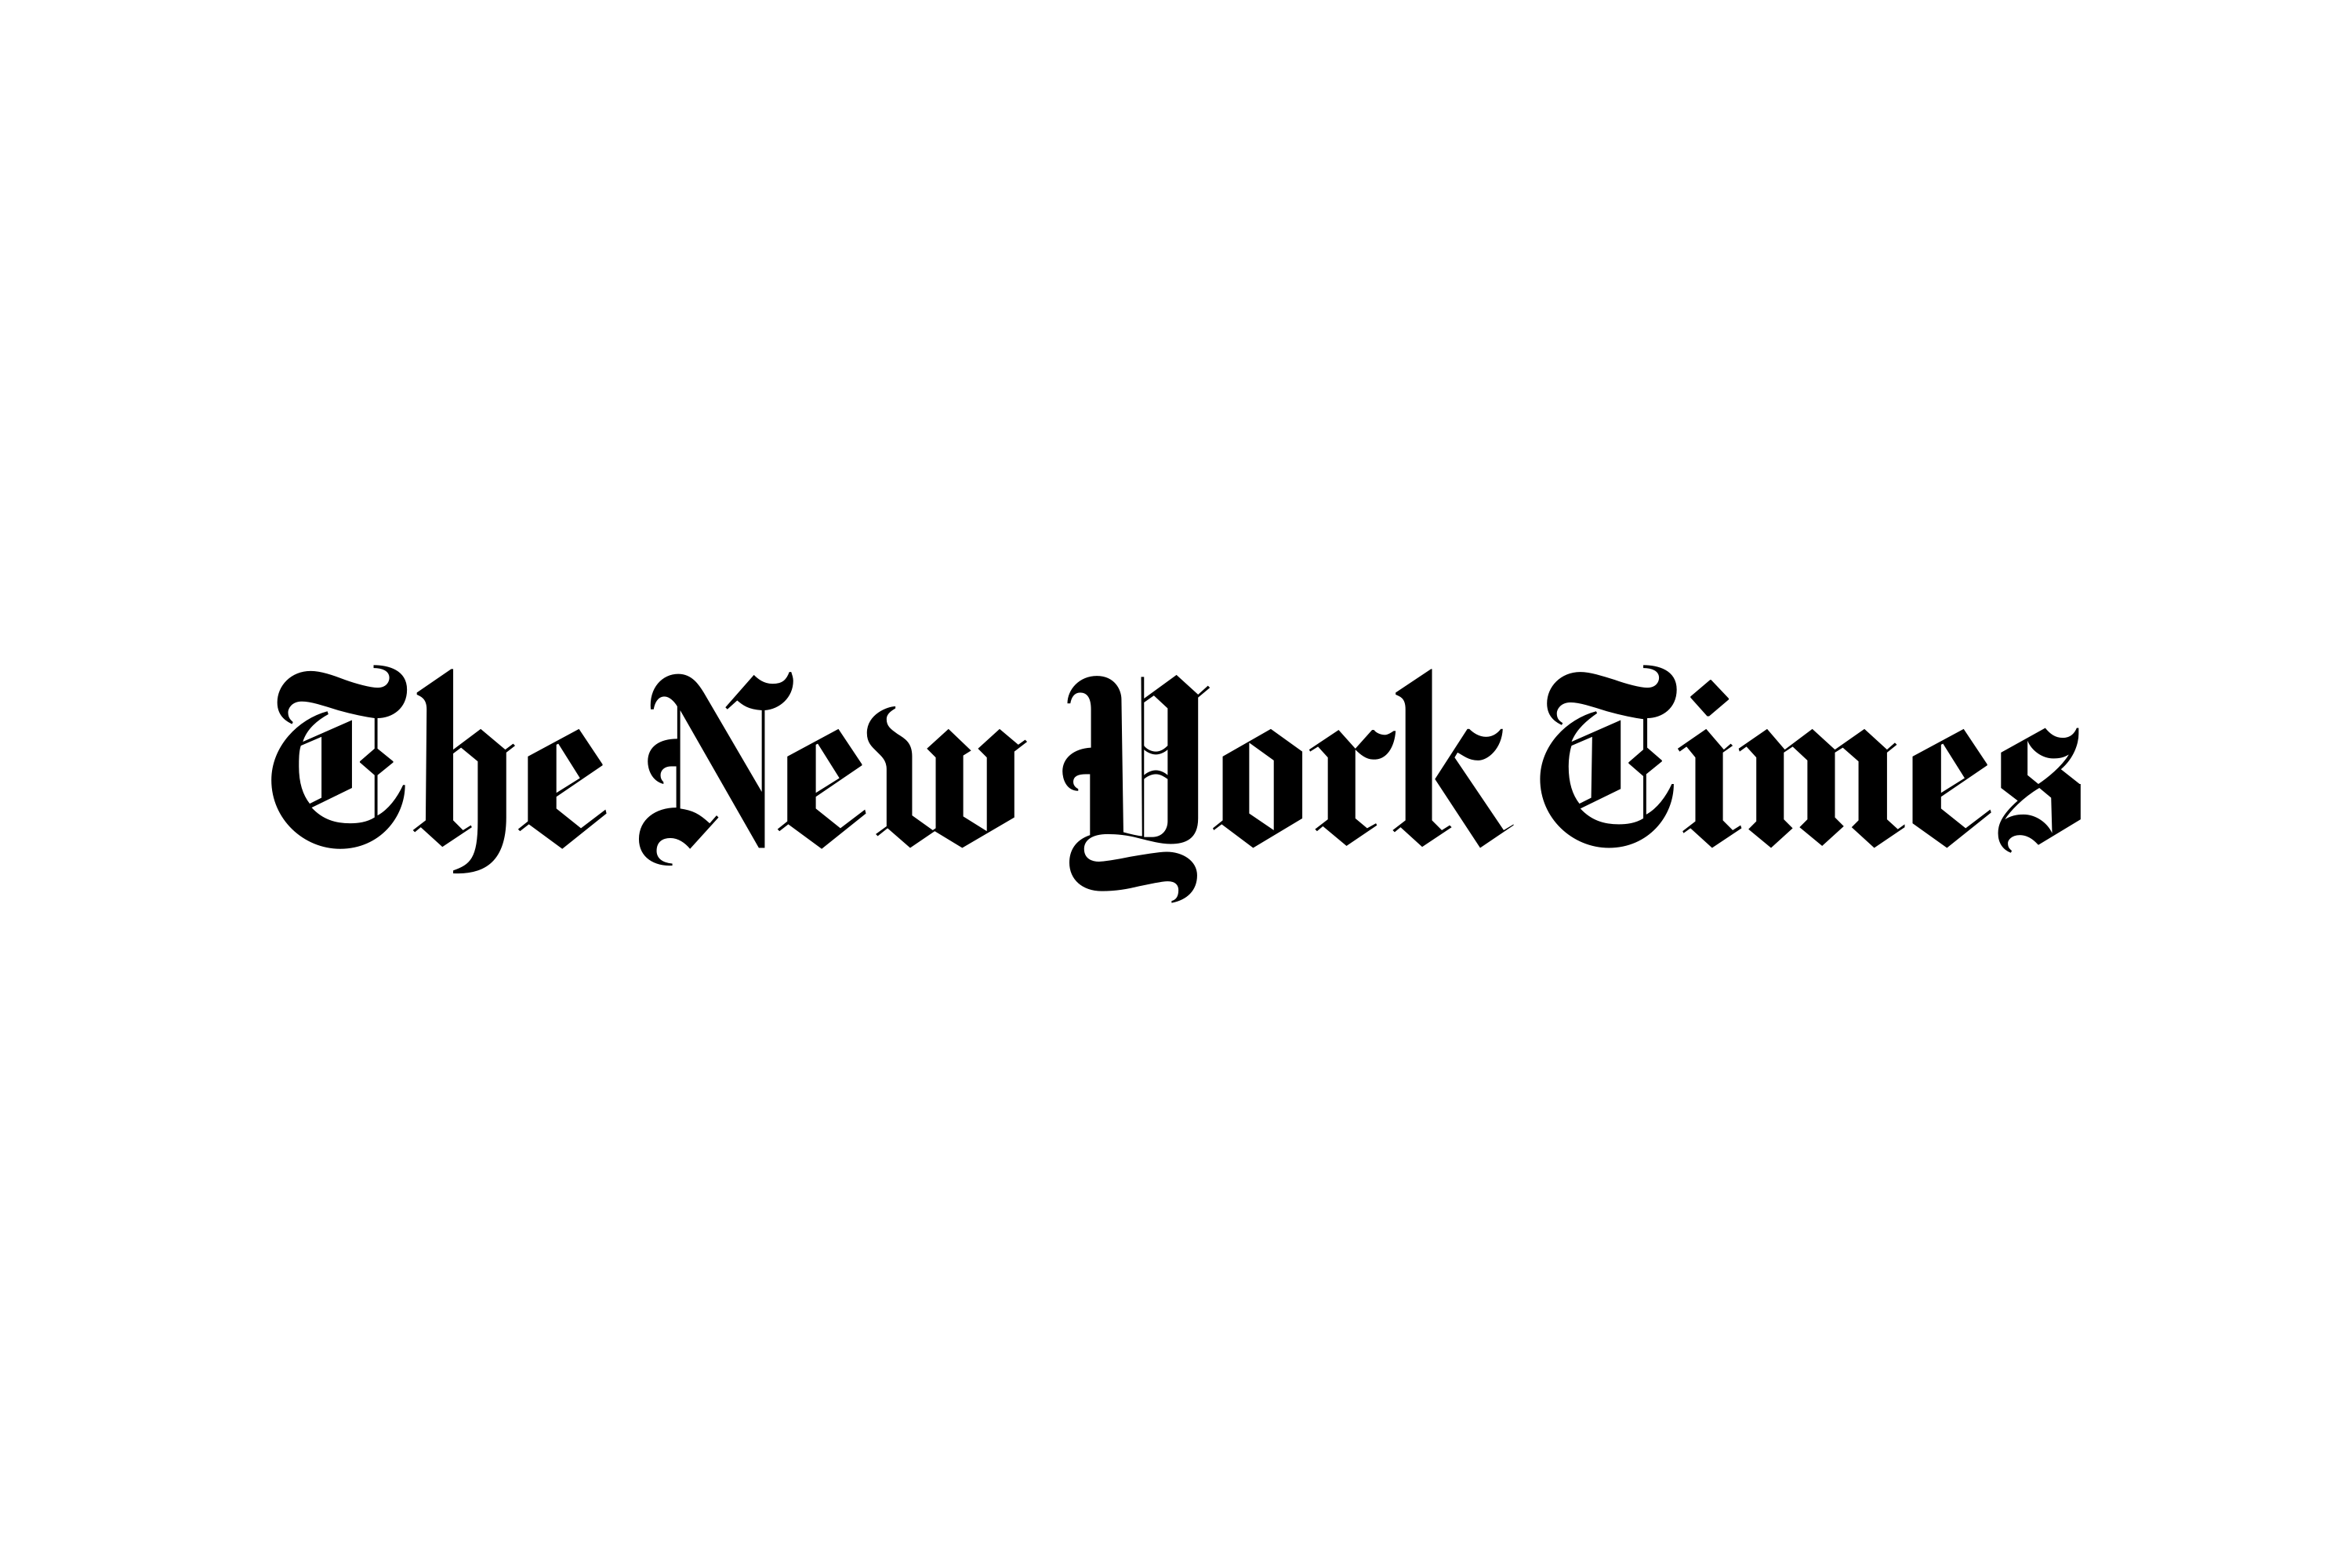 The New York Times backs bundling for long-term growth